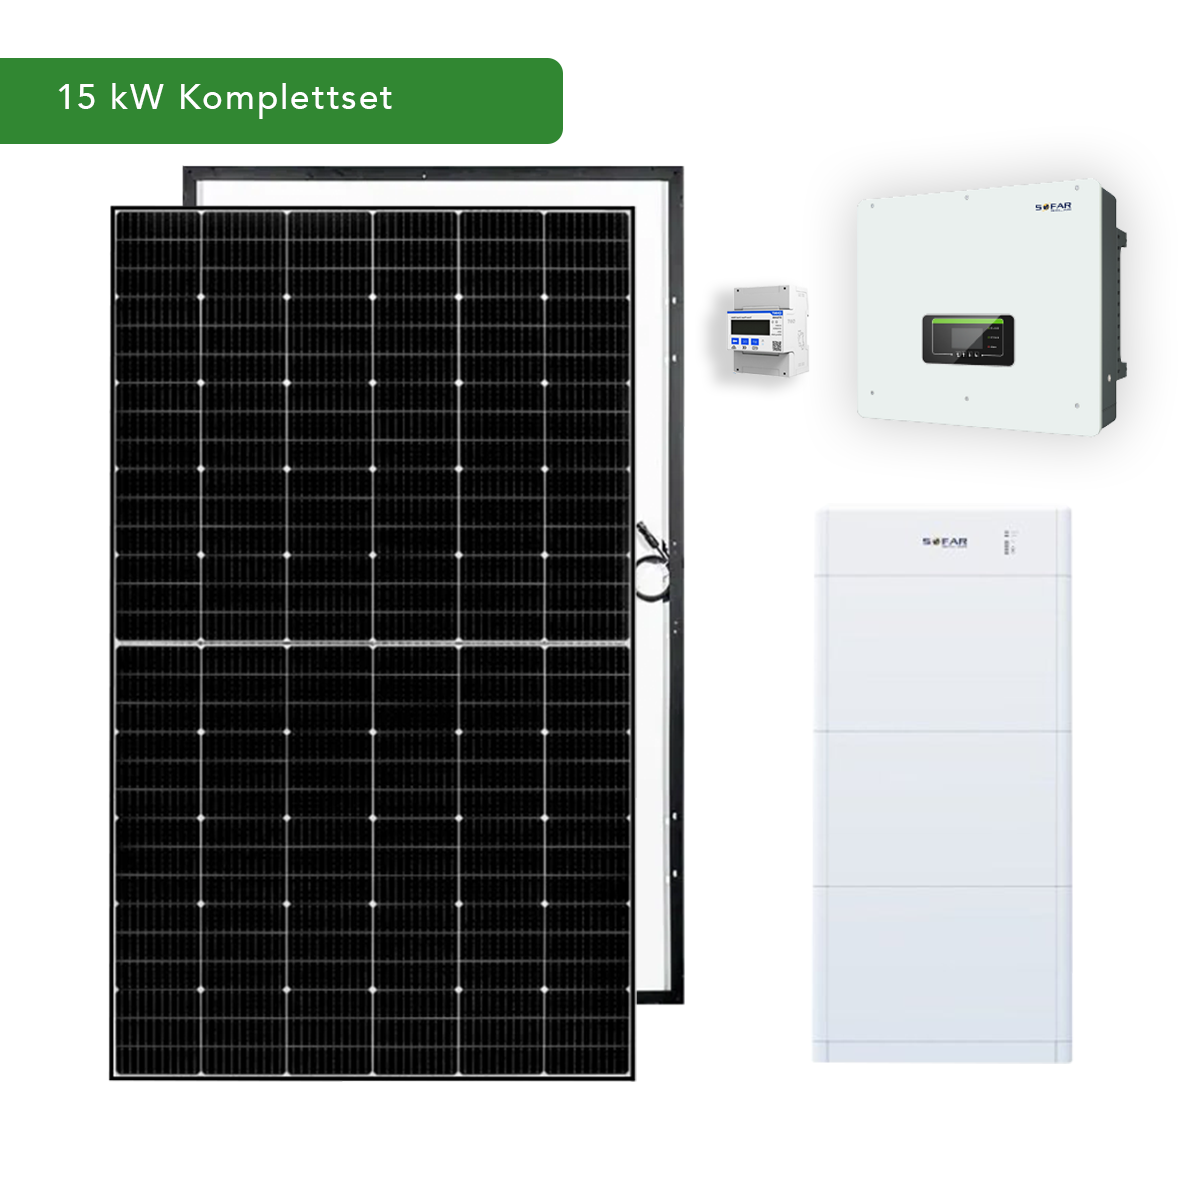 Sofar Solar 15 kW PV-Komplettset mit Notstromfunktion